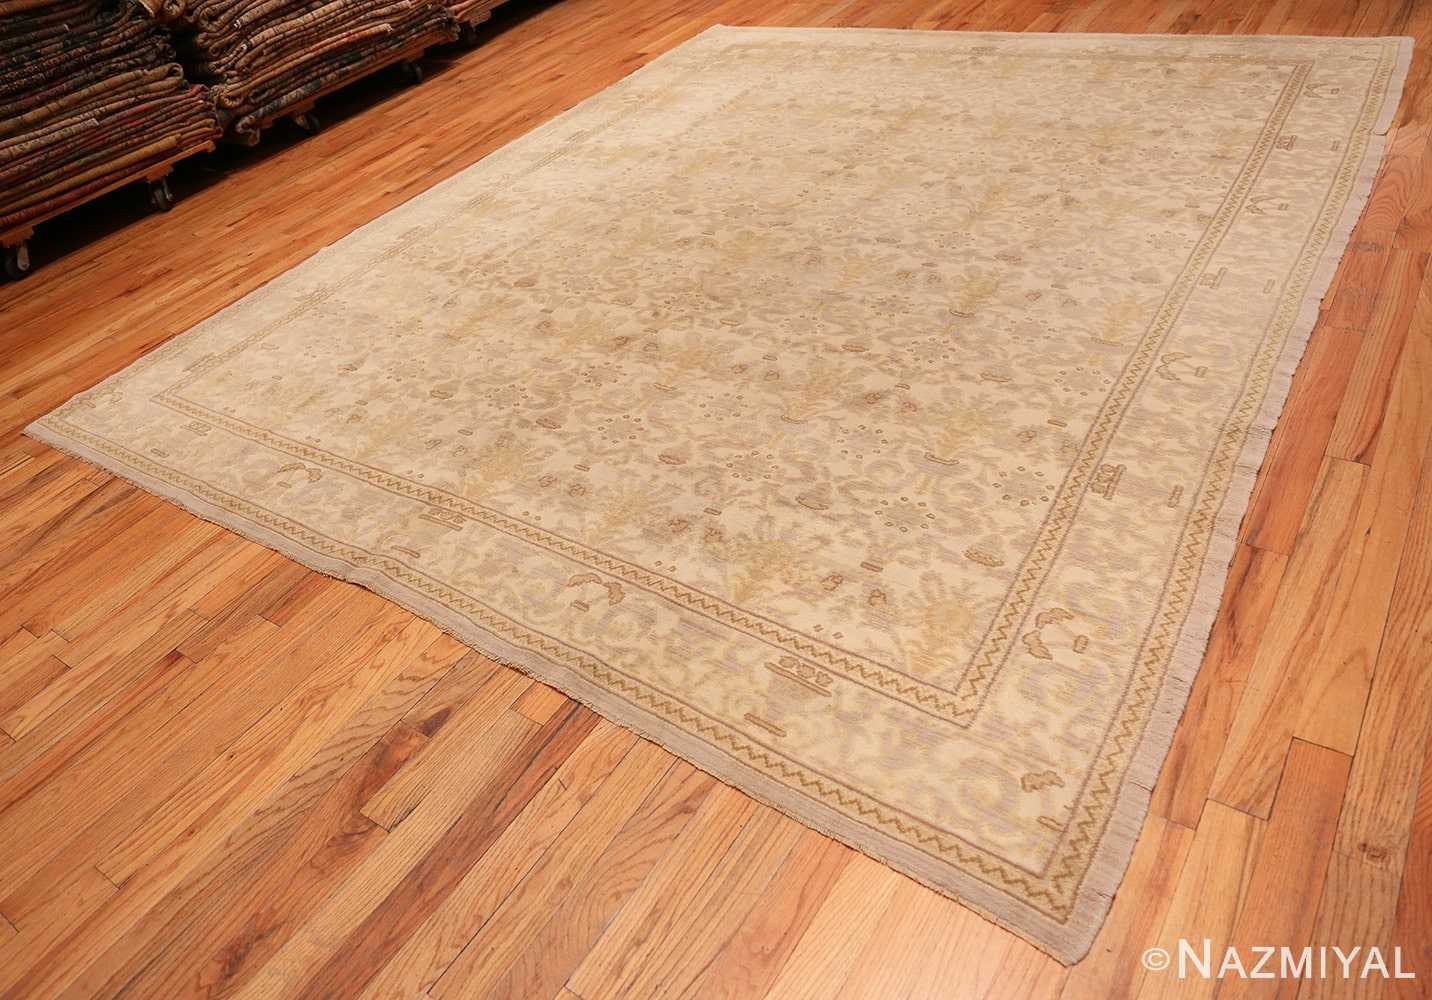 Full Decorative room size Antique Spanish carpet 2678 by Nazmiyal